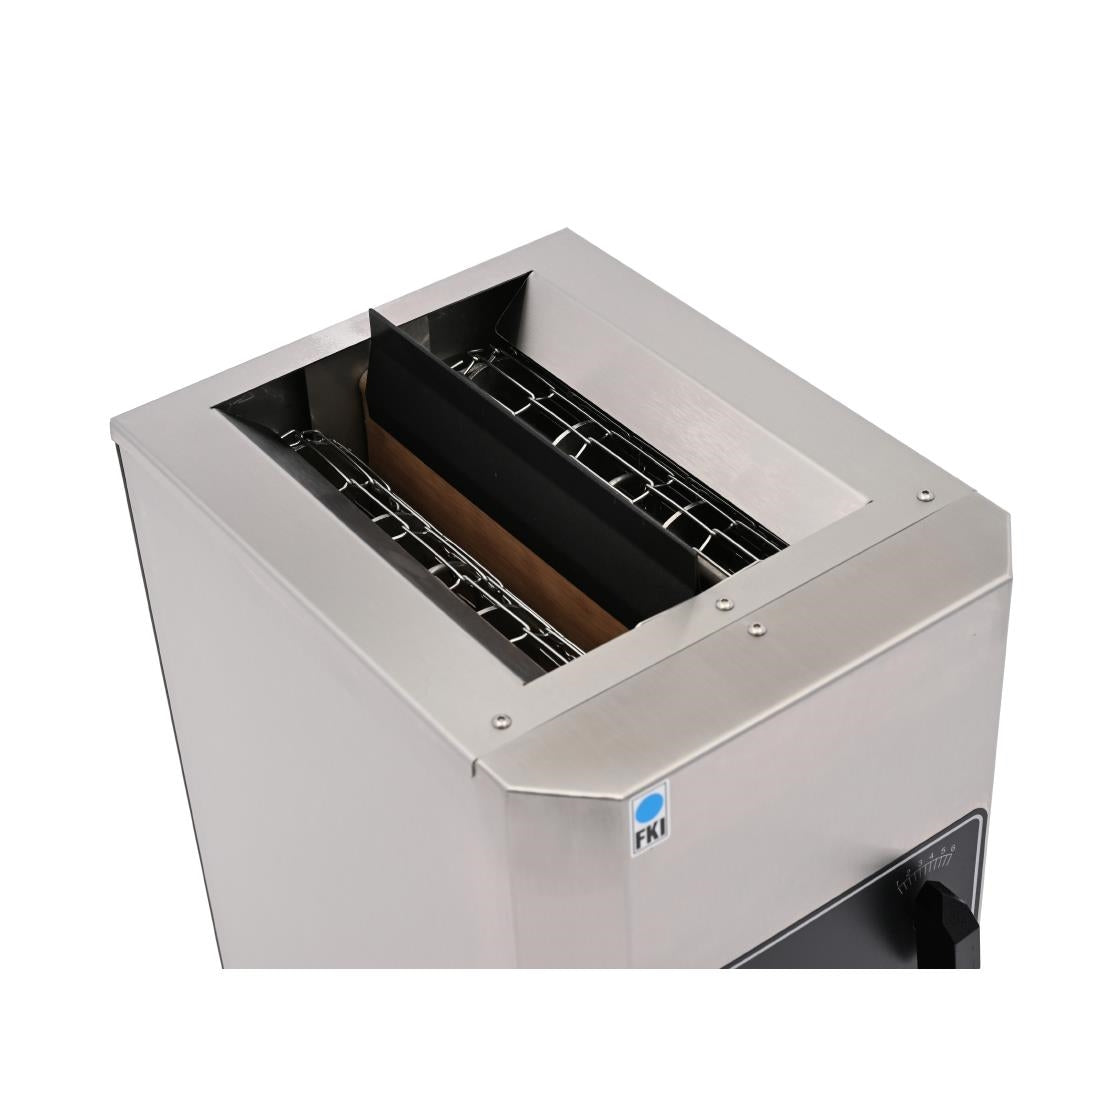 CK115 FKI Rototoaster Vertical Bun Toaster TL5417 JD Catering Equipment Solutions Ltd